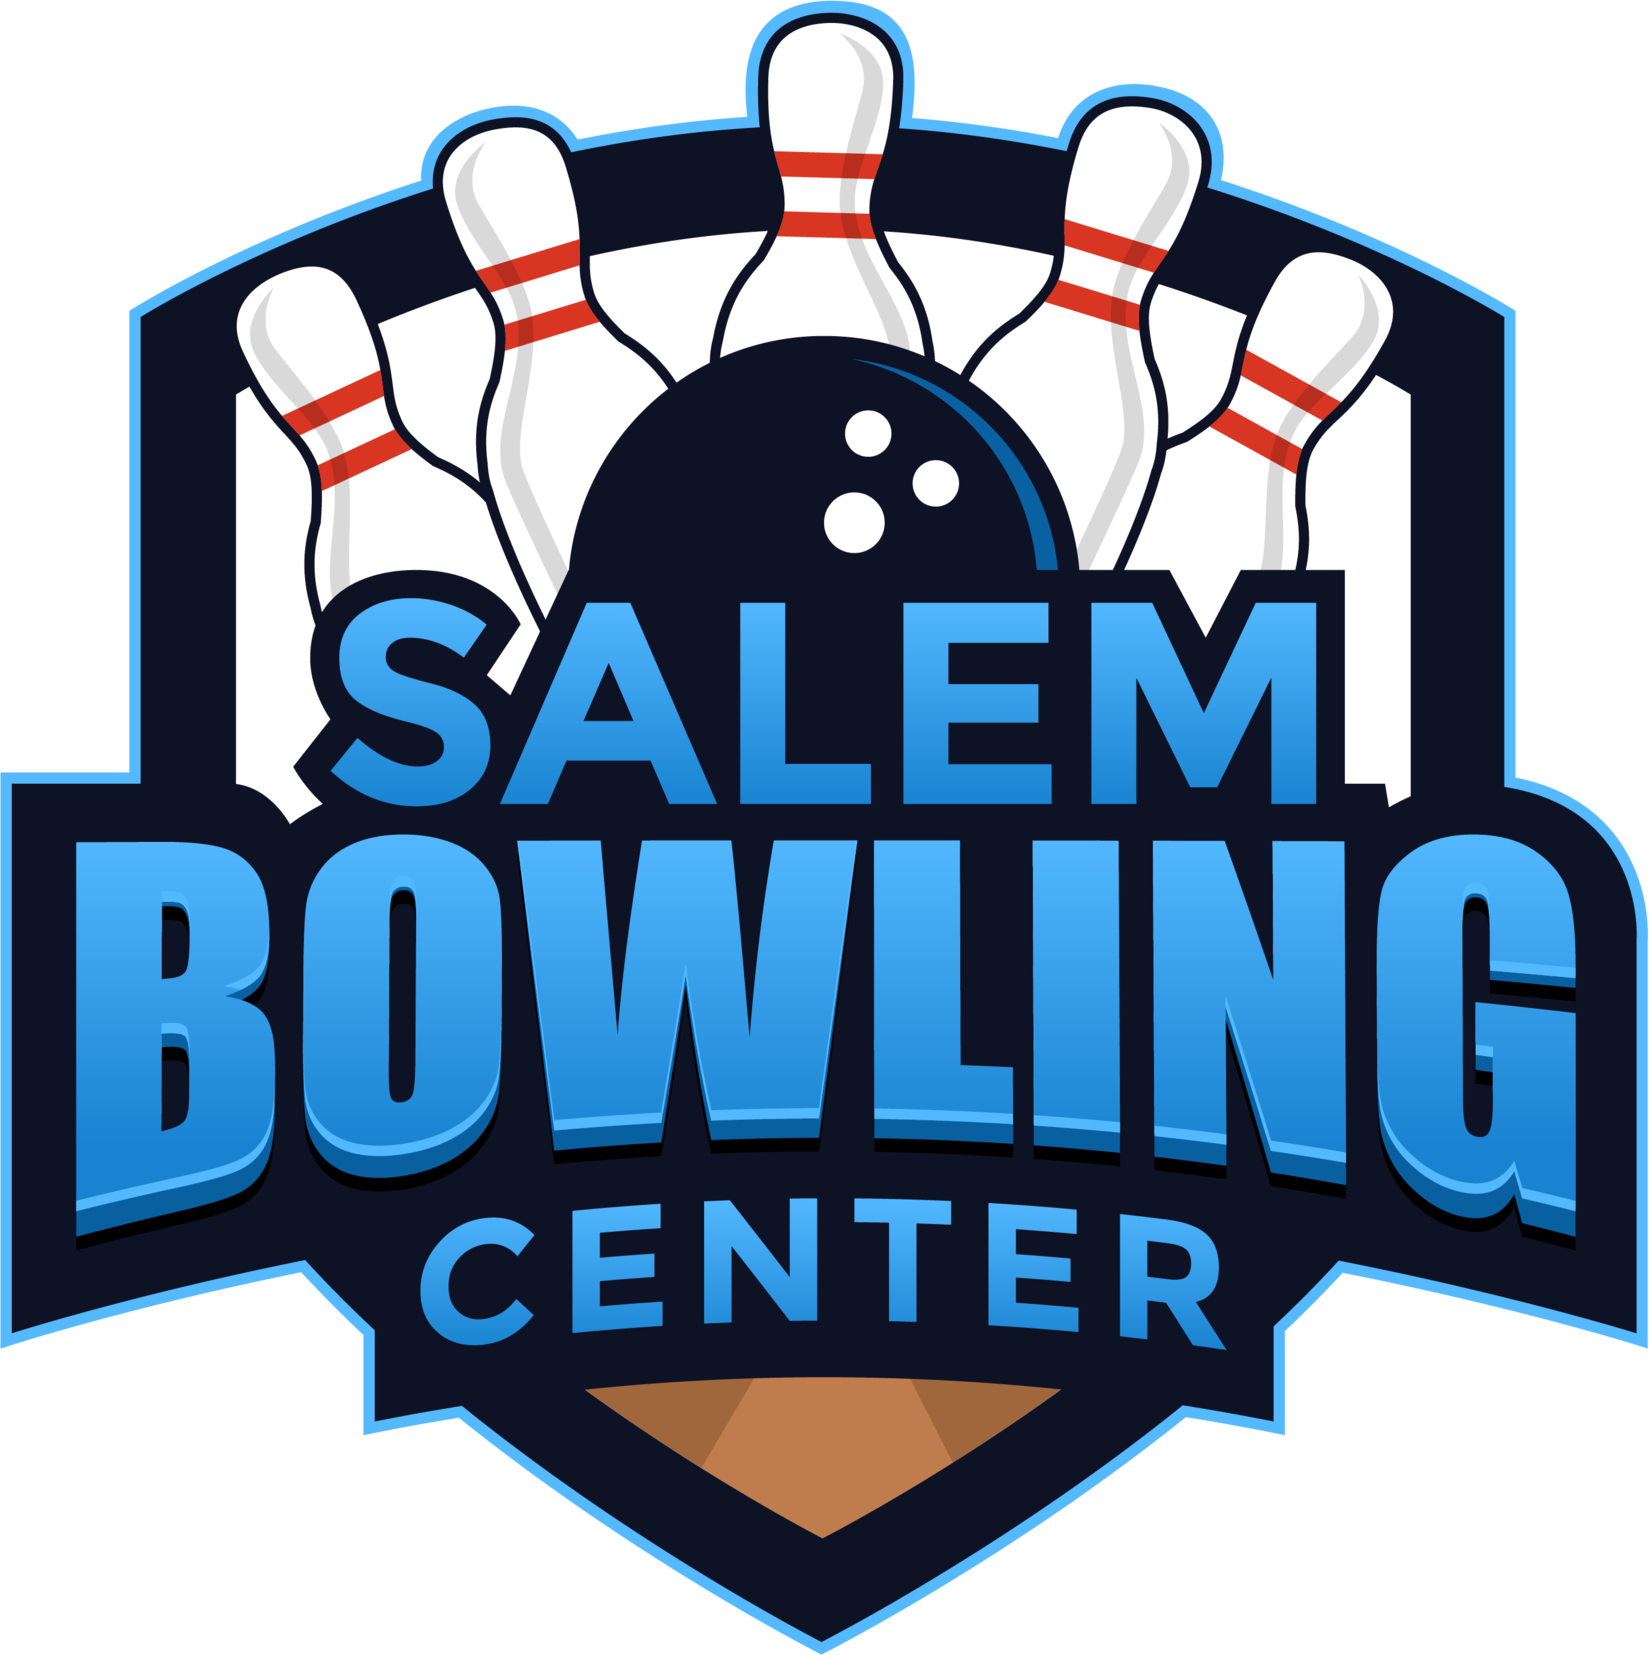 Salem Bowling Center!